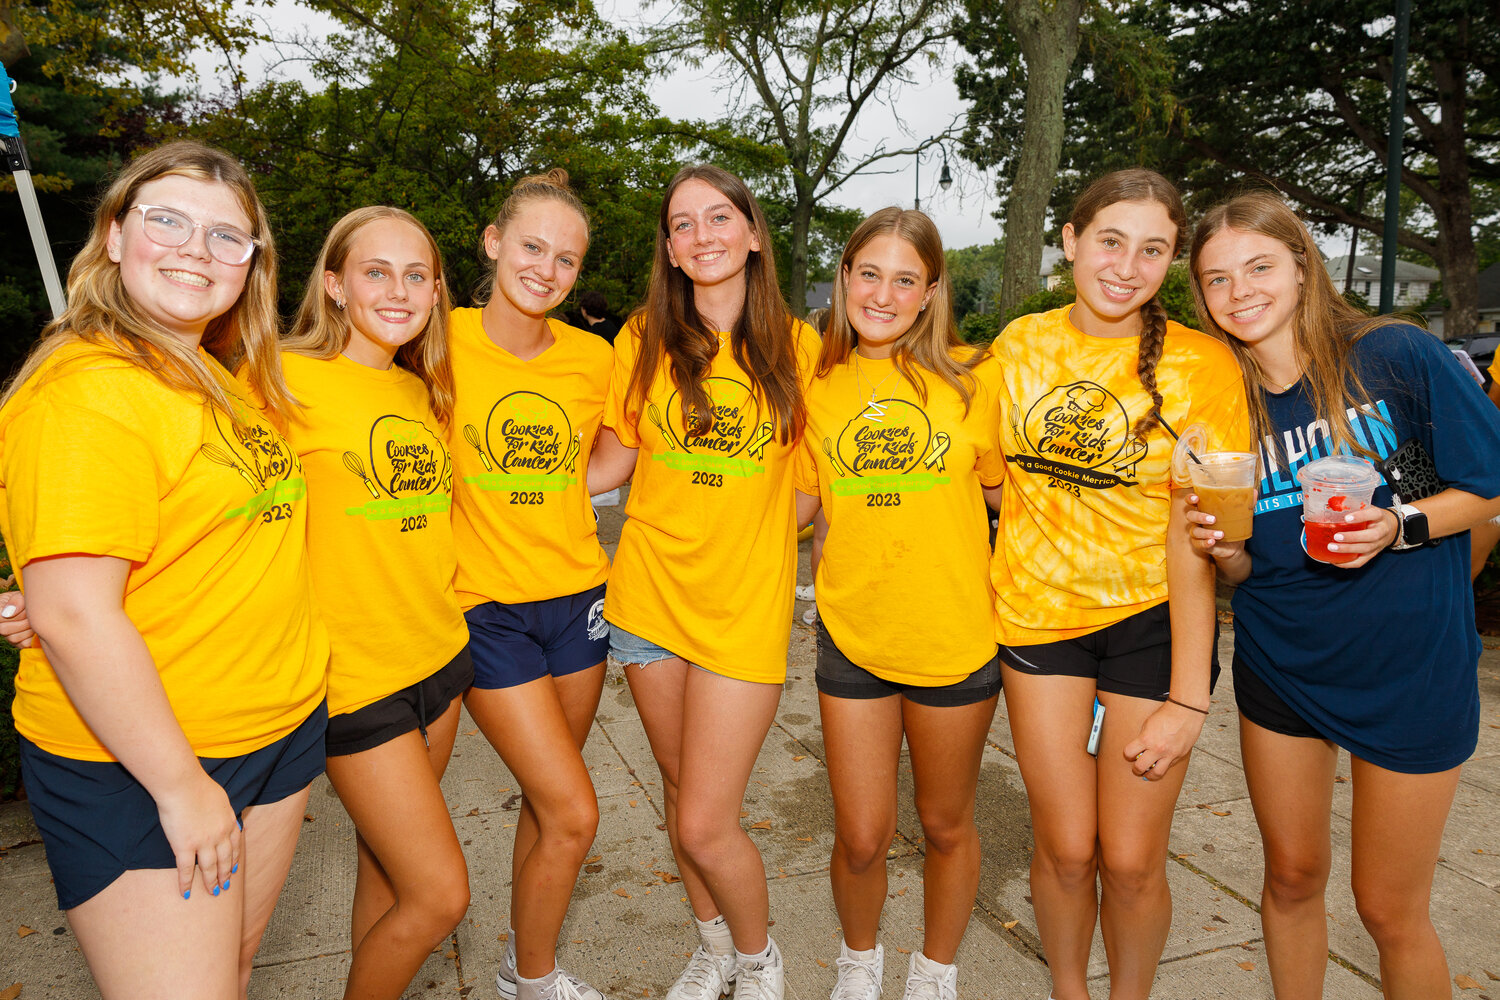 Julia Gallo, 15, Abbey Trinkus, 15, Olivia Trinkus, 17, Sophia Jones, 17, Mia Kalista, 17, Samantha Kalinoglu, 15, and Kaitlyn Stibritz, 16, attended the campaign’s kickoff.